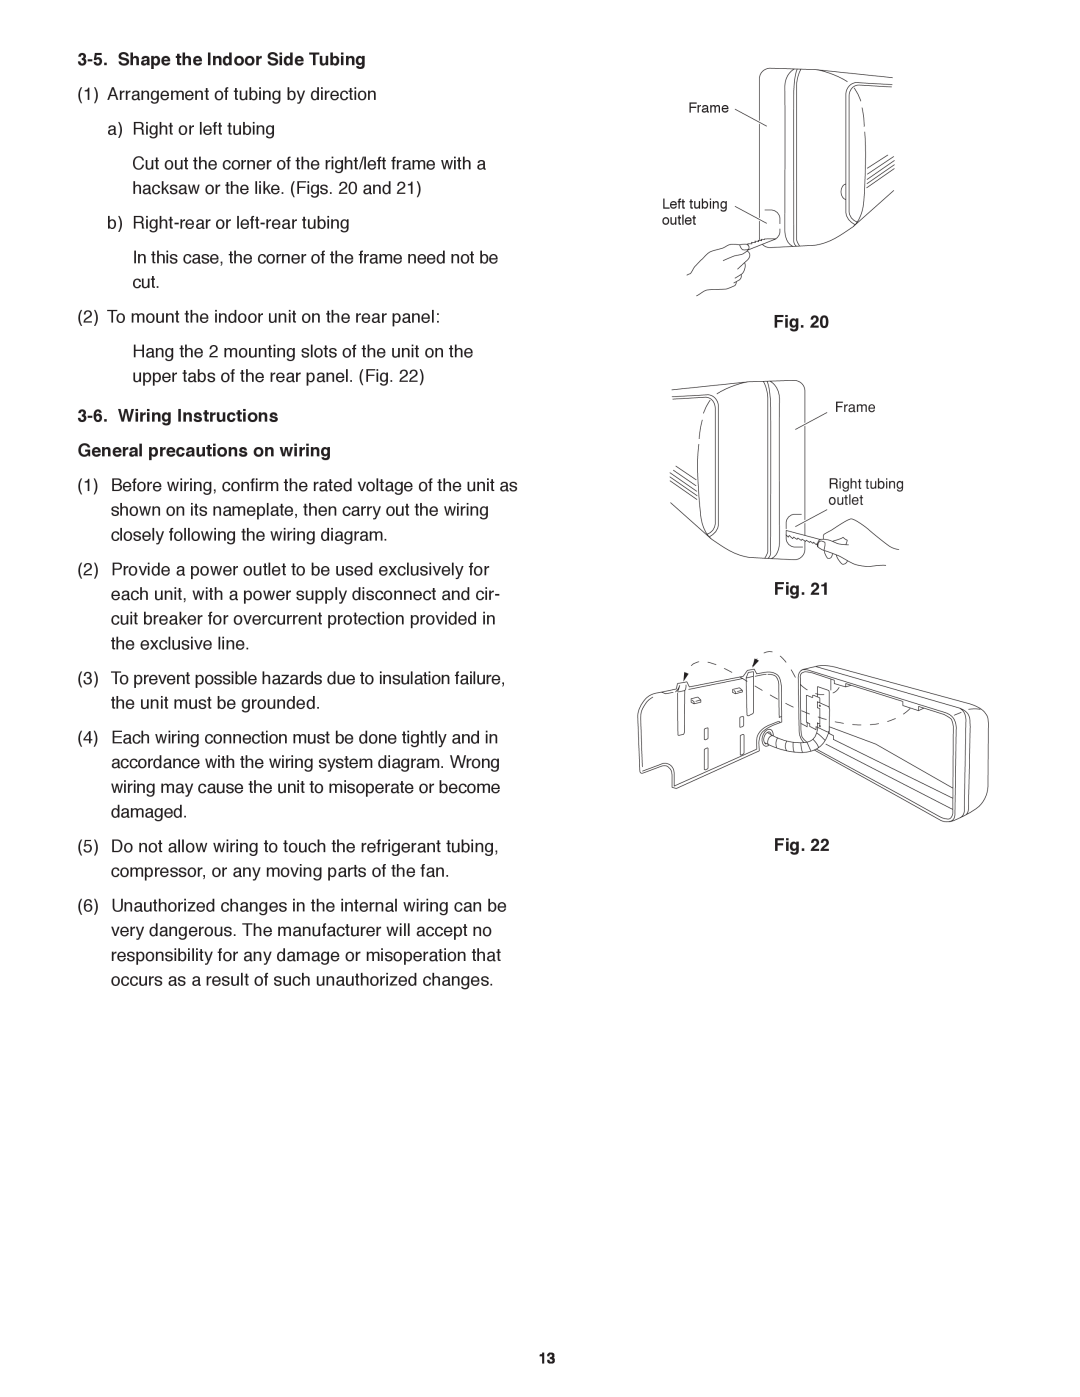 Panasonic CU-KS24NKU Shape the Indoor Side Tubing, Wiring Instructions, General precautions on wiring, Fig. Fig 